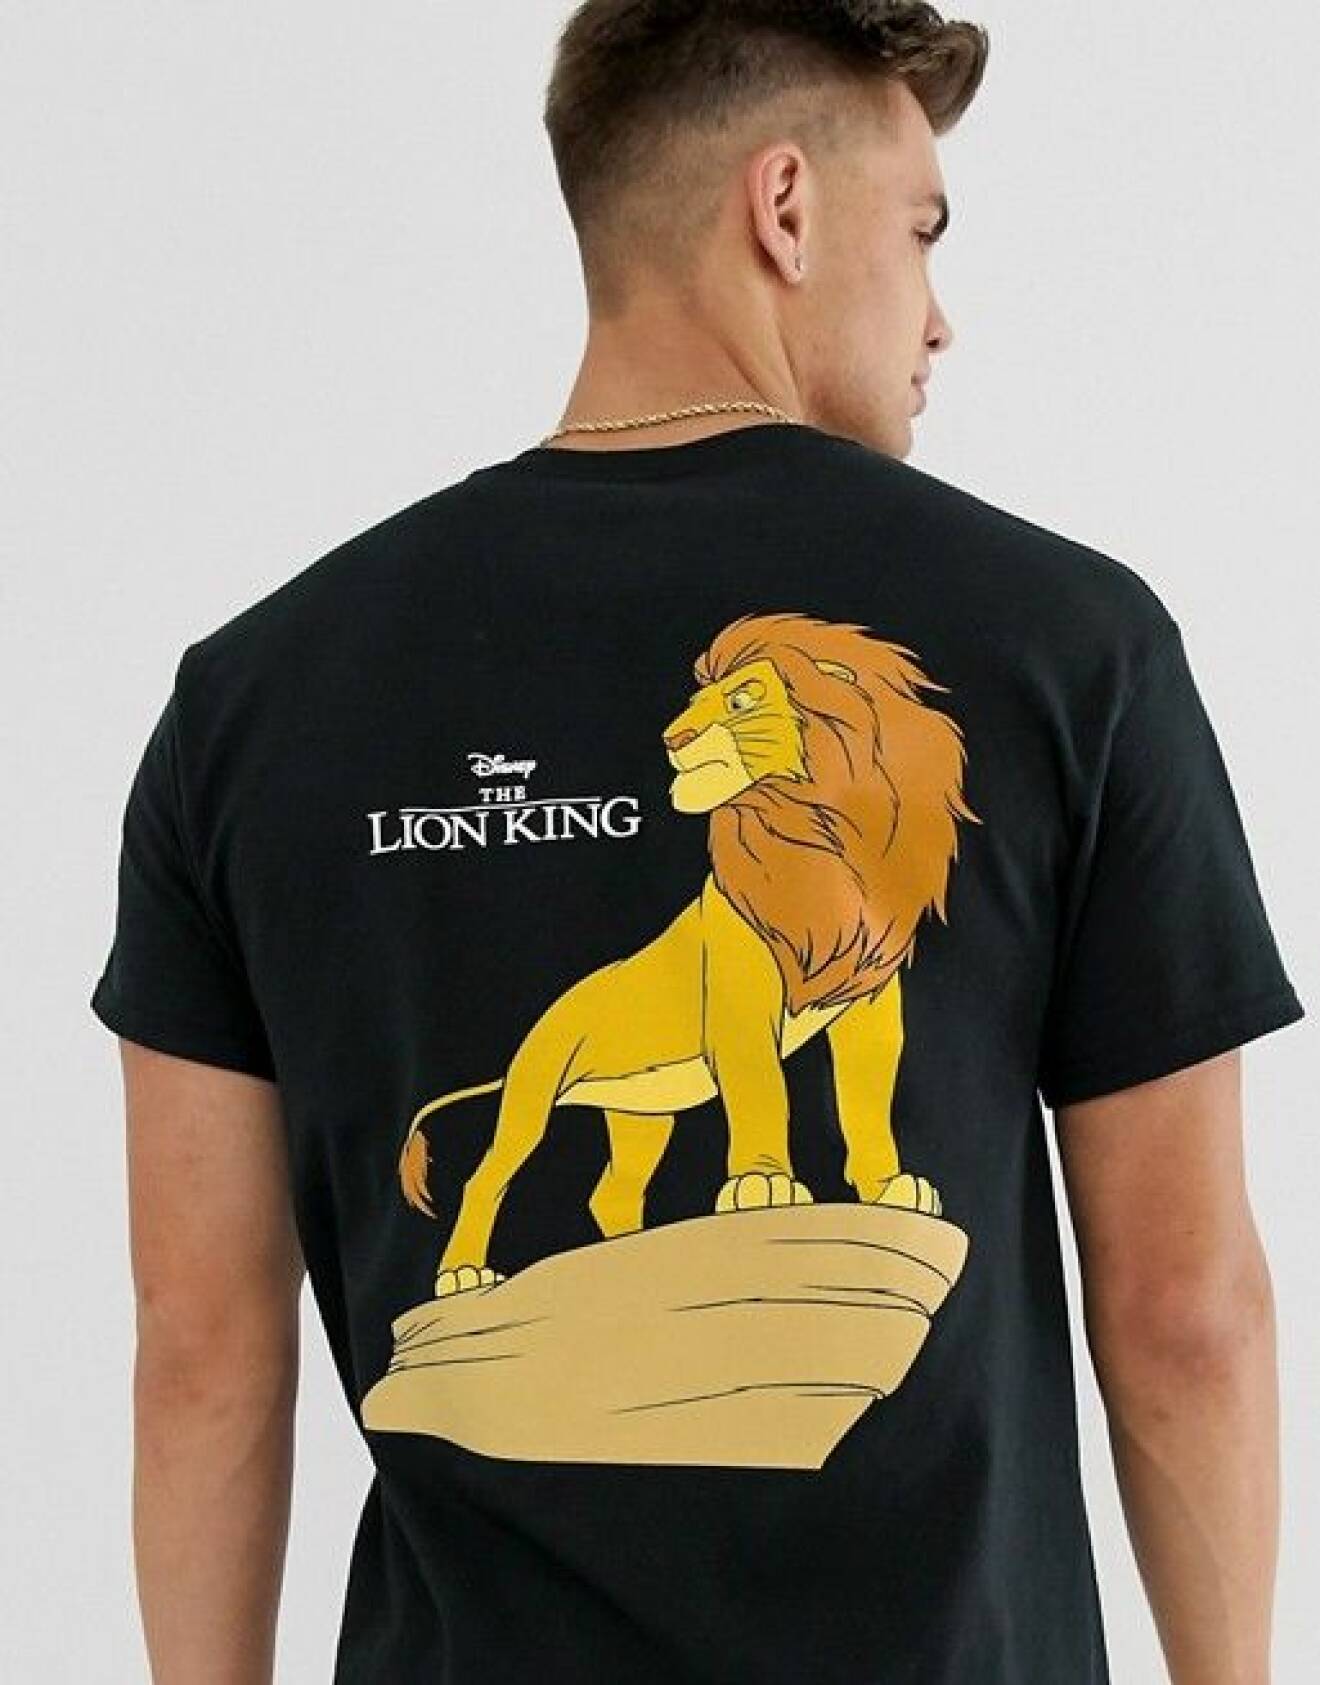 Lejonkungen t-shirt